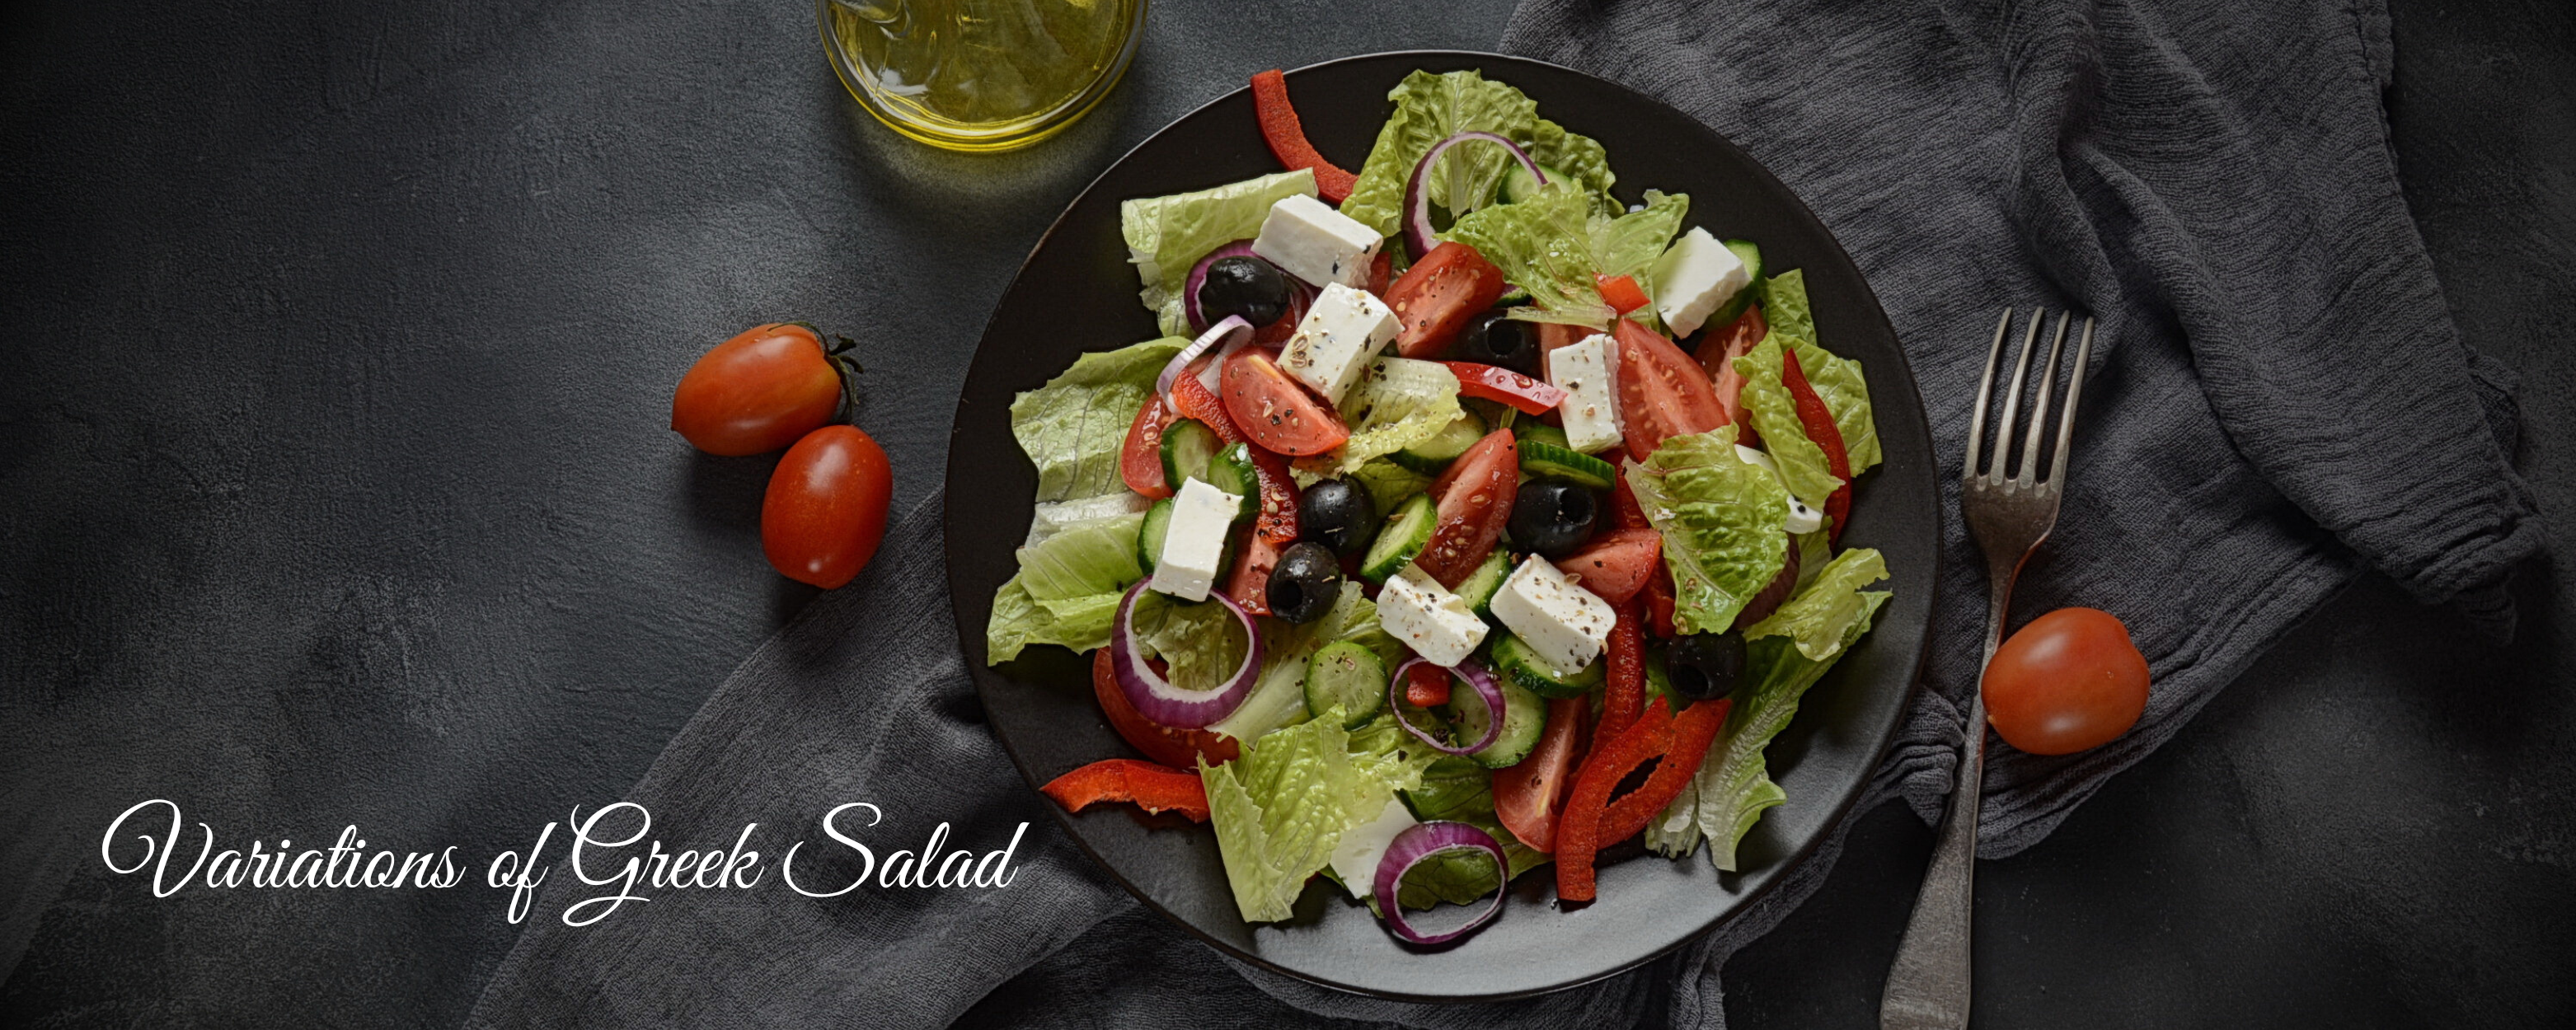 Variations of Greek Salad